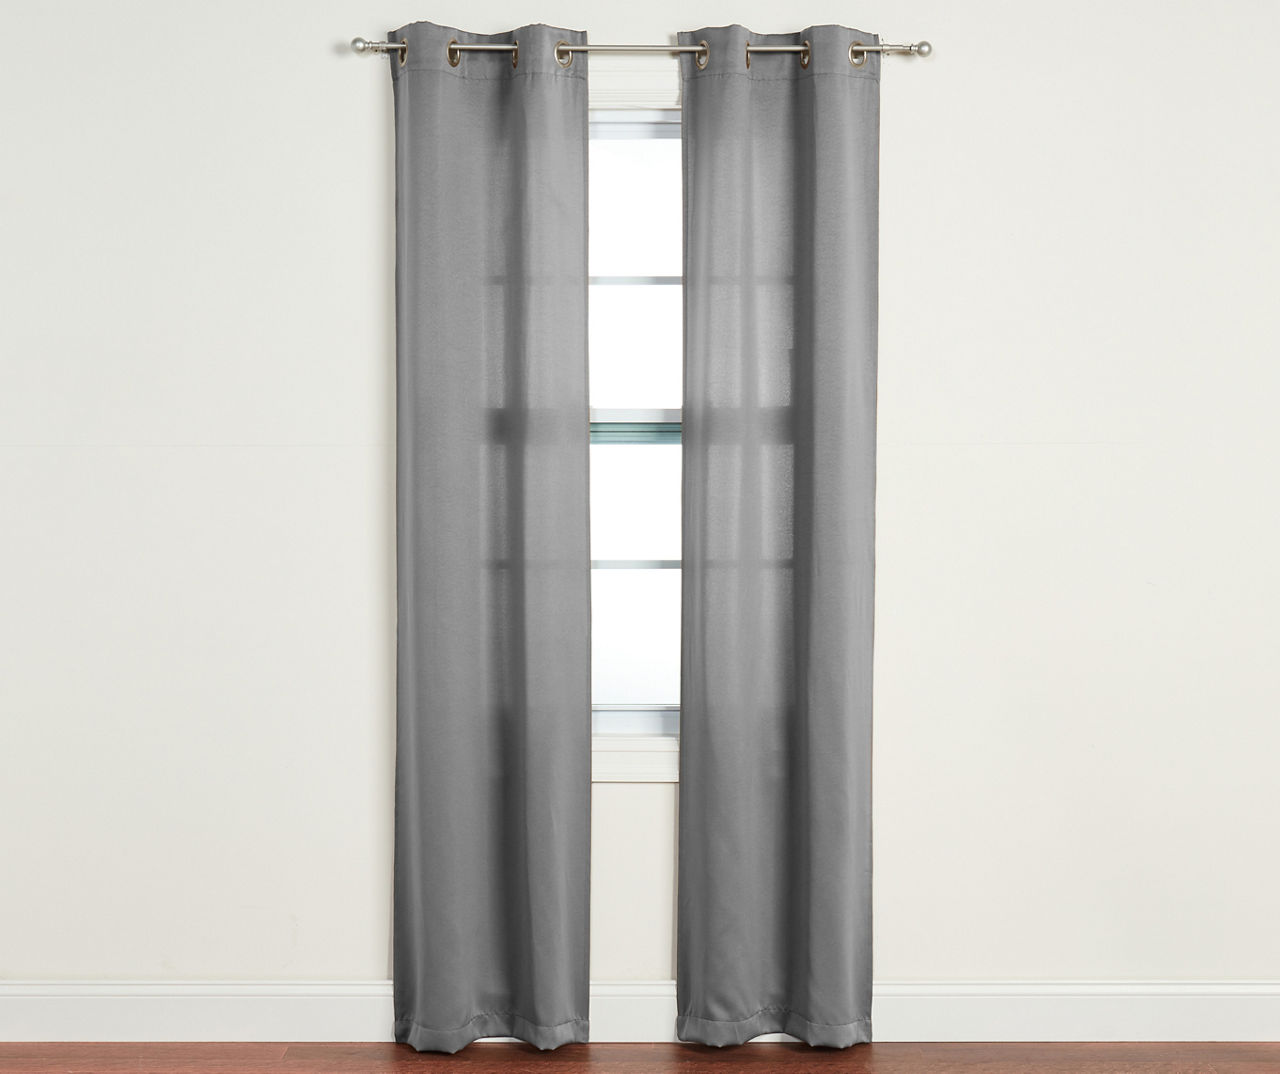 4-Piece Putnam Gray Room-Darkening Curtain Panels Set, (84")